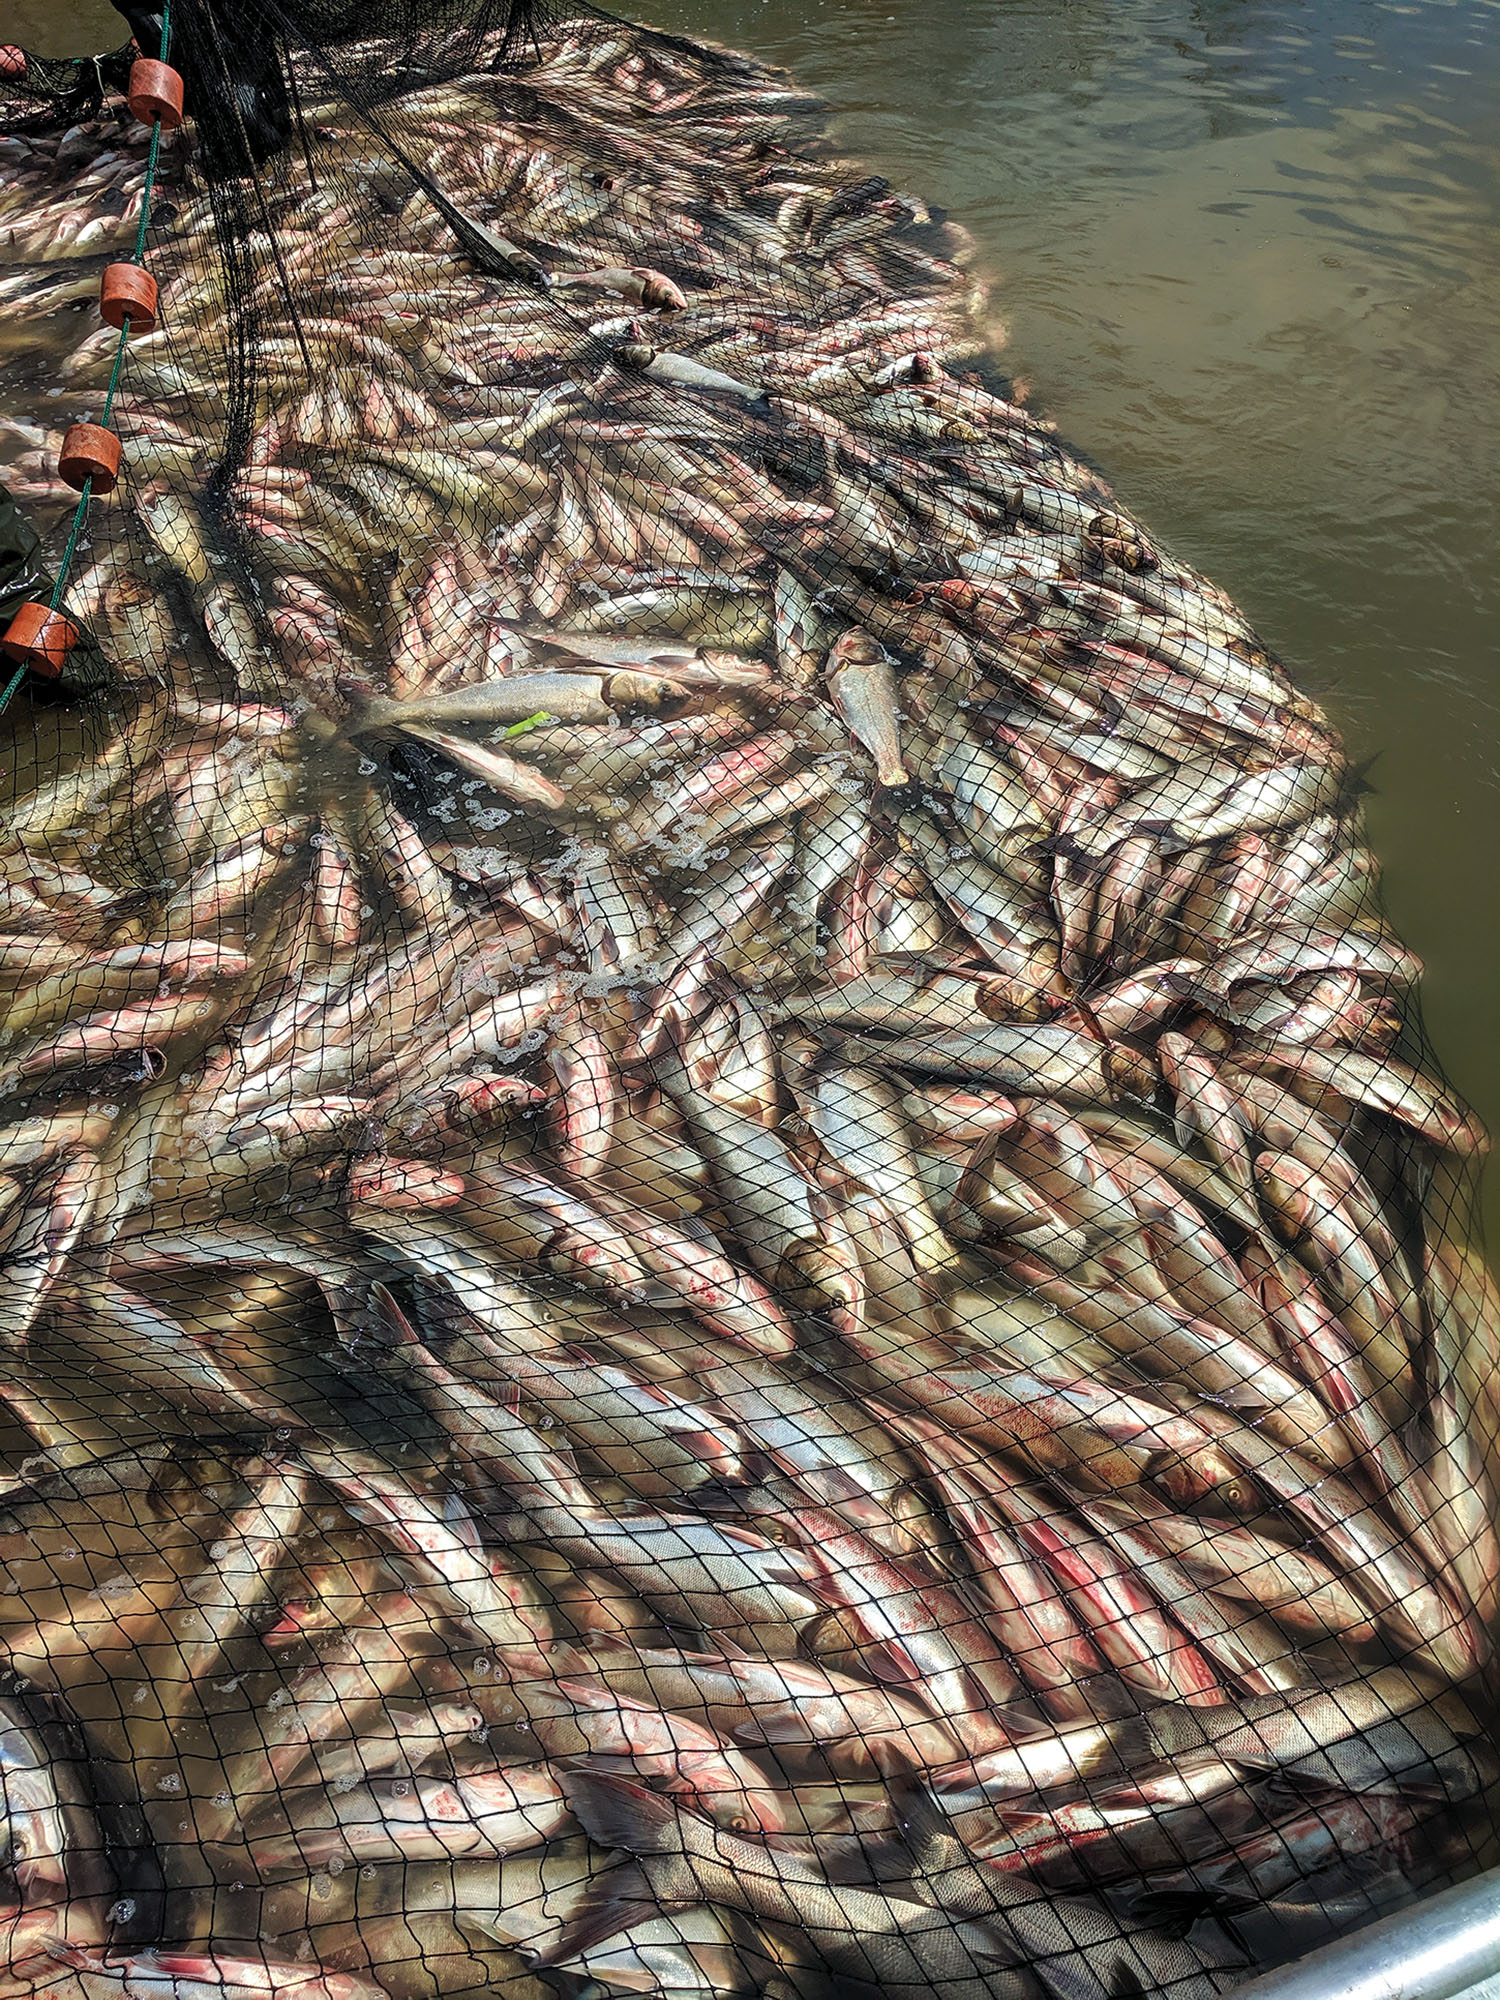 Asian Carp Fishing Method Being Tested In Kentucky - The Waterways